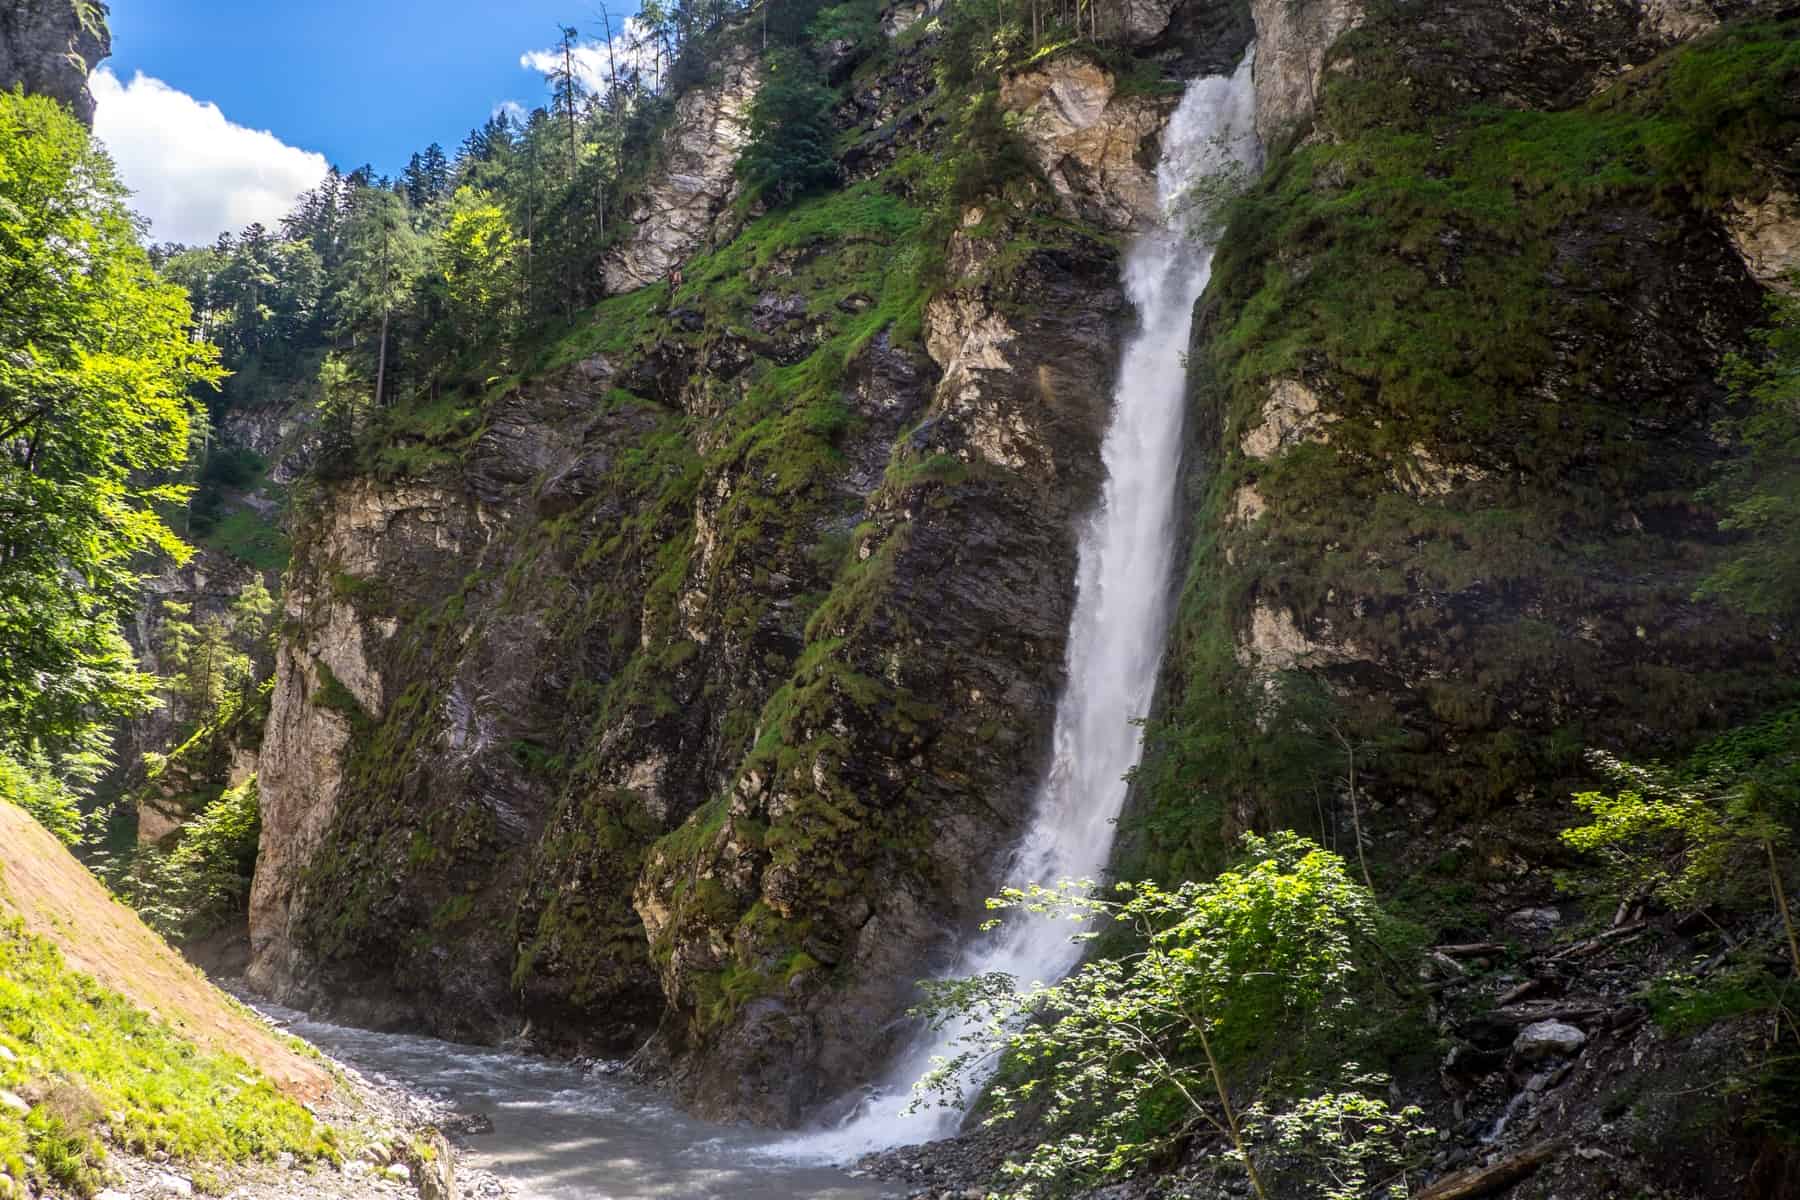 A short white waterfall flows over moss coloured stones at the Liechtensteinklamm gorge in St. Johann in Salzburg